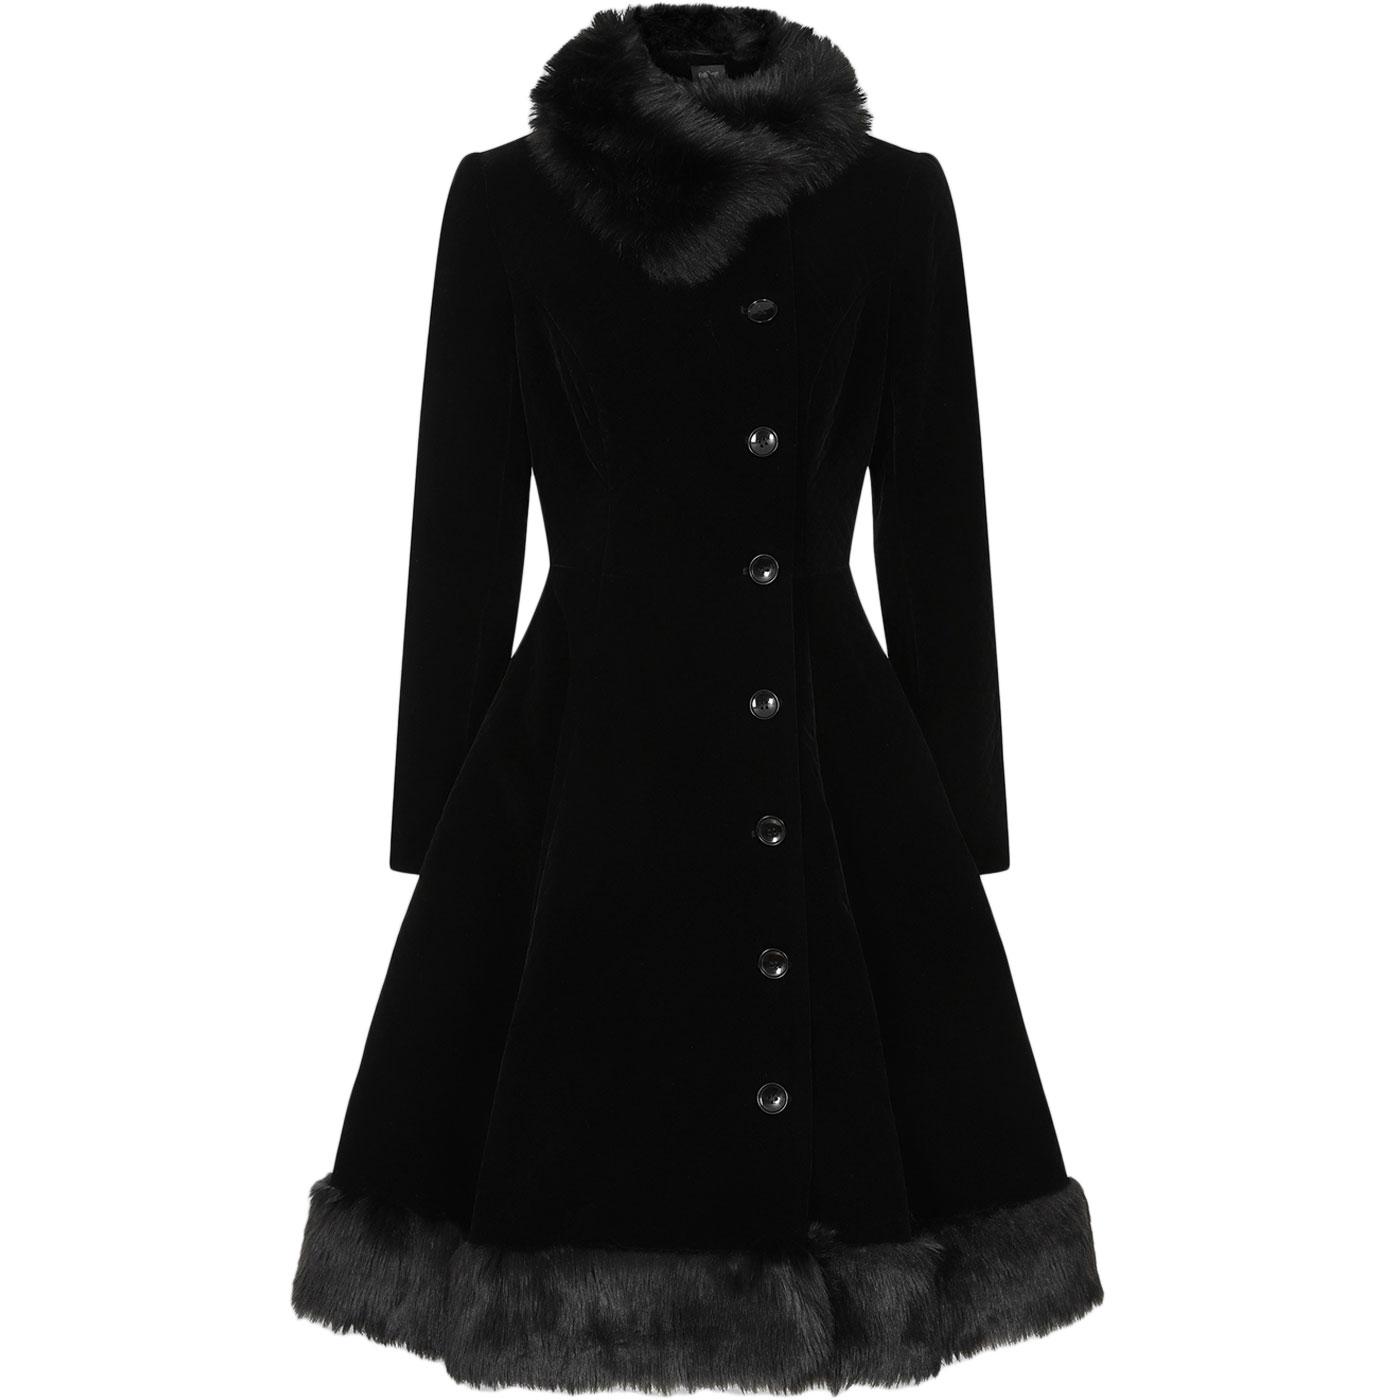 Nuit COLLECTIF Quilted Velvet Swing Coat in Black